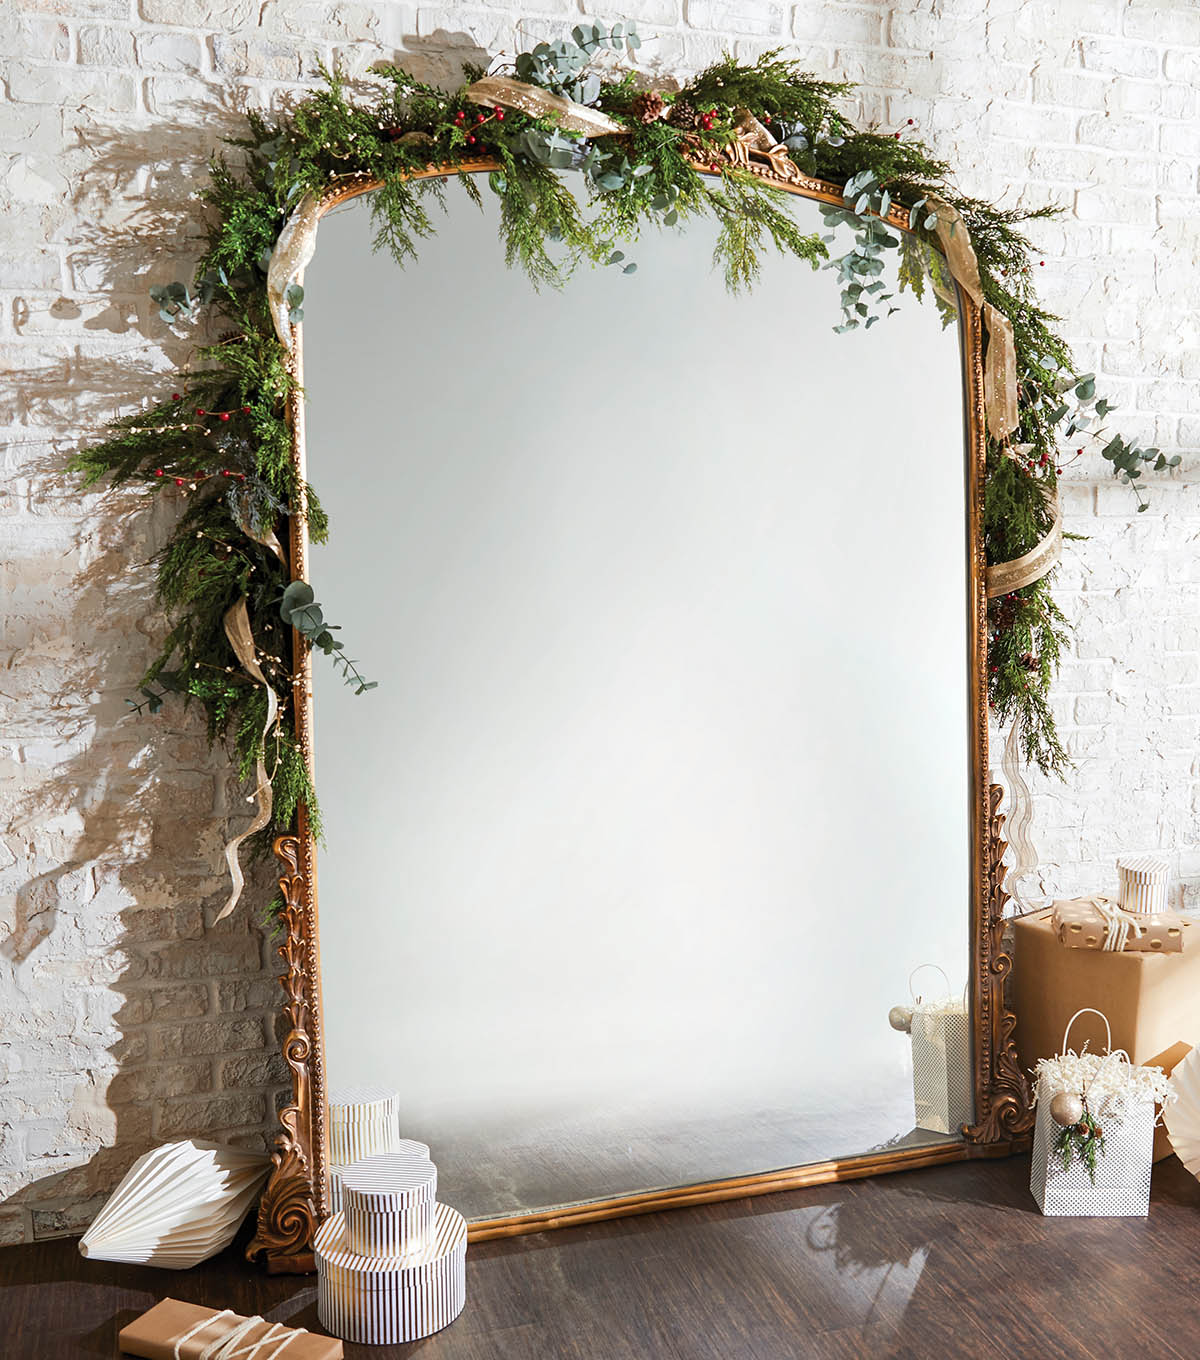 How To Make An Evergreen Holiday Mirror Garland | JOANN